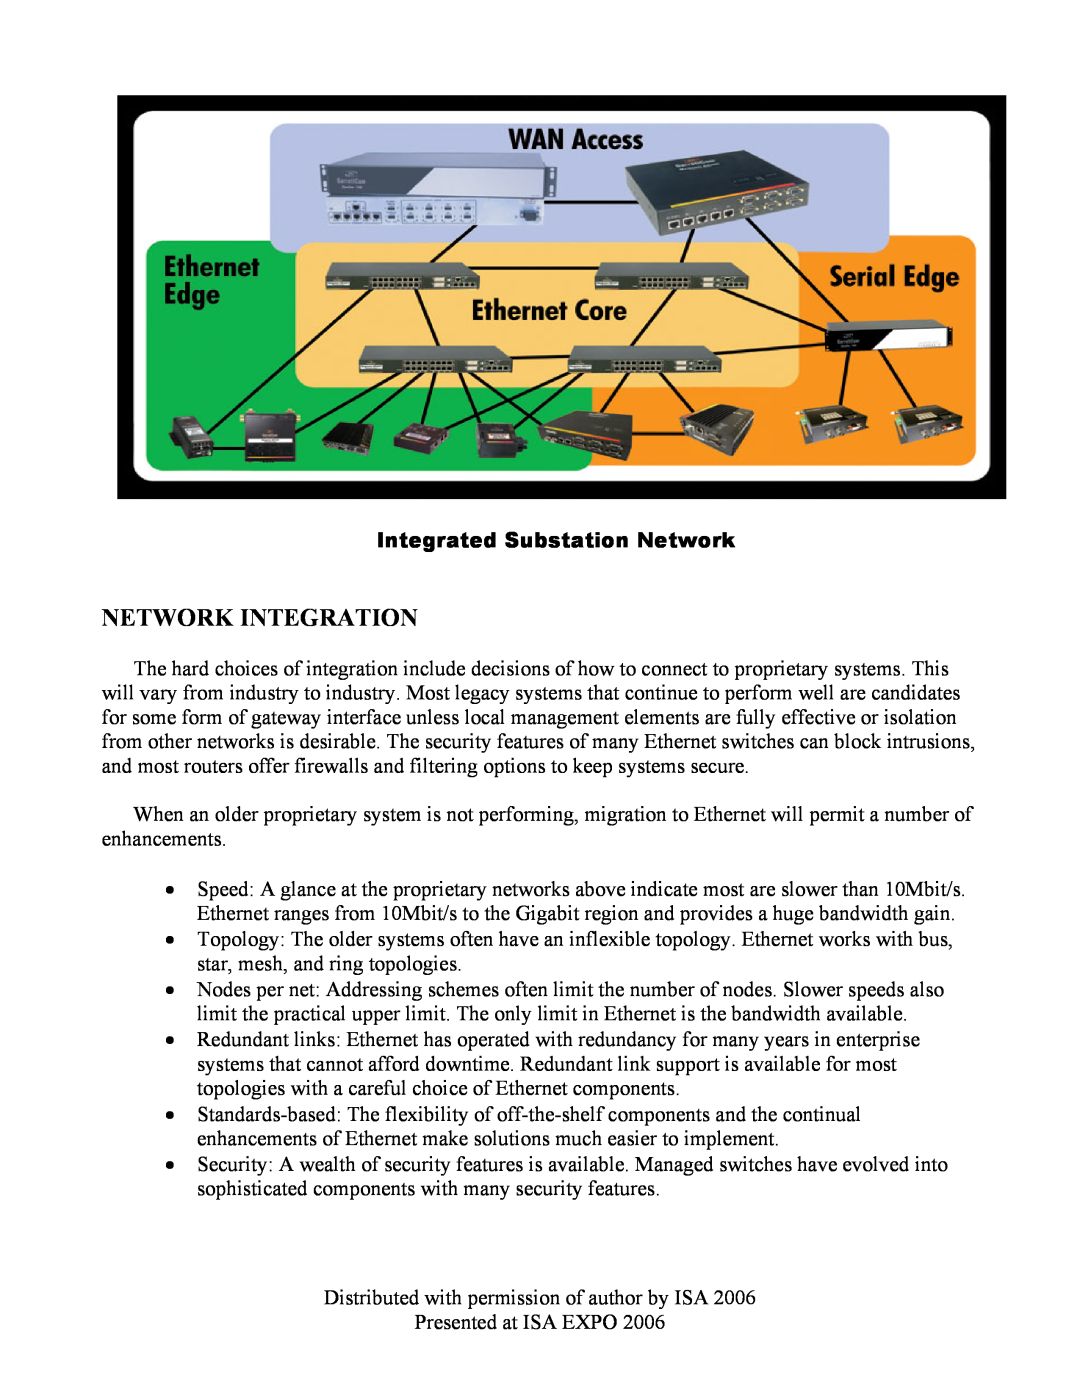 GarrettCom OSI manual Network Integration, Integrated Substation Network 